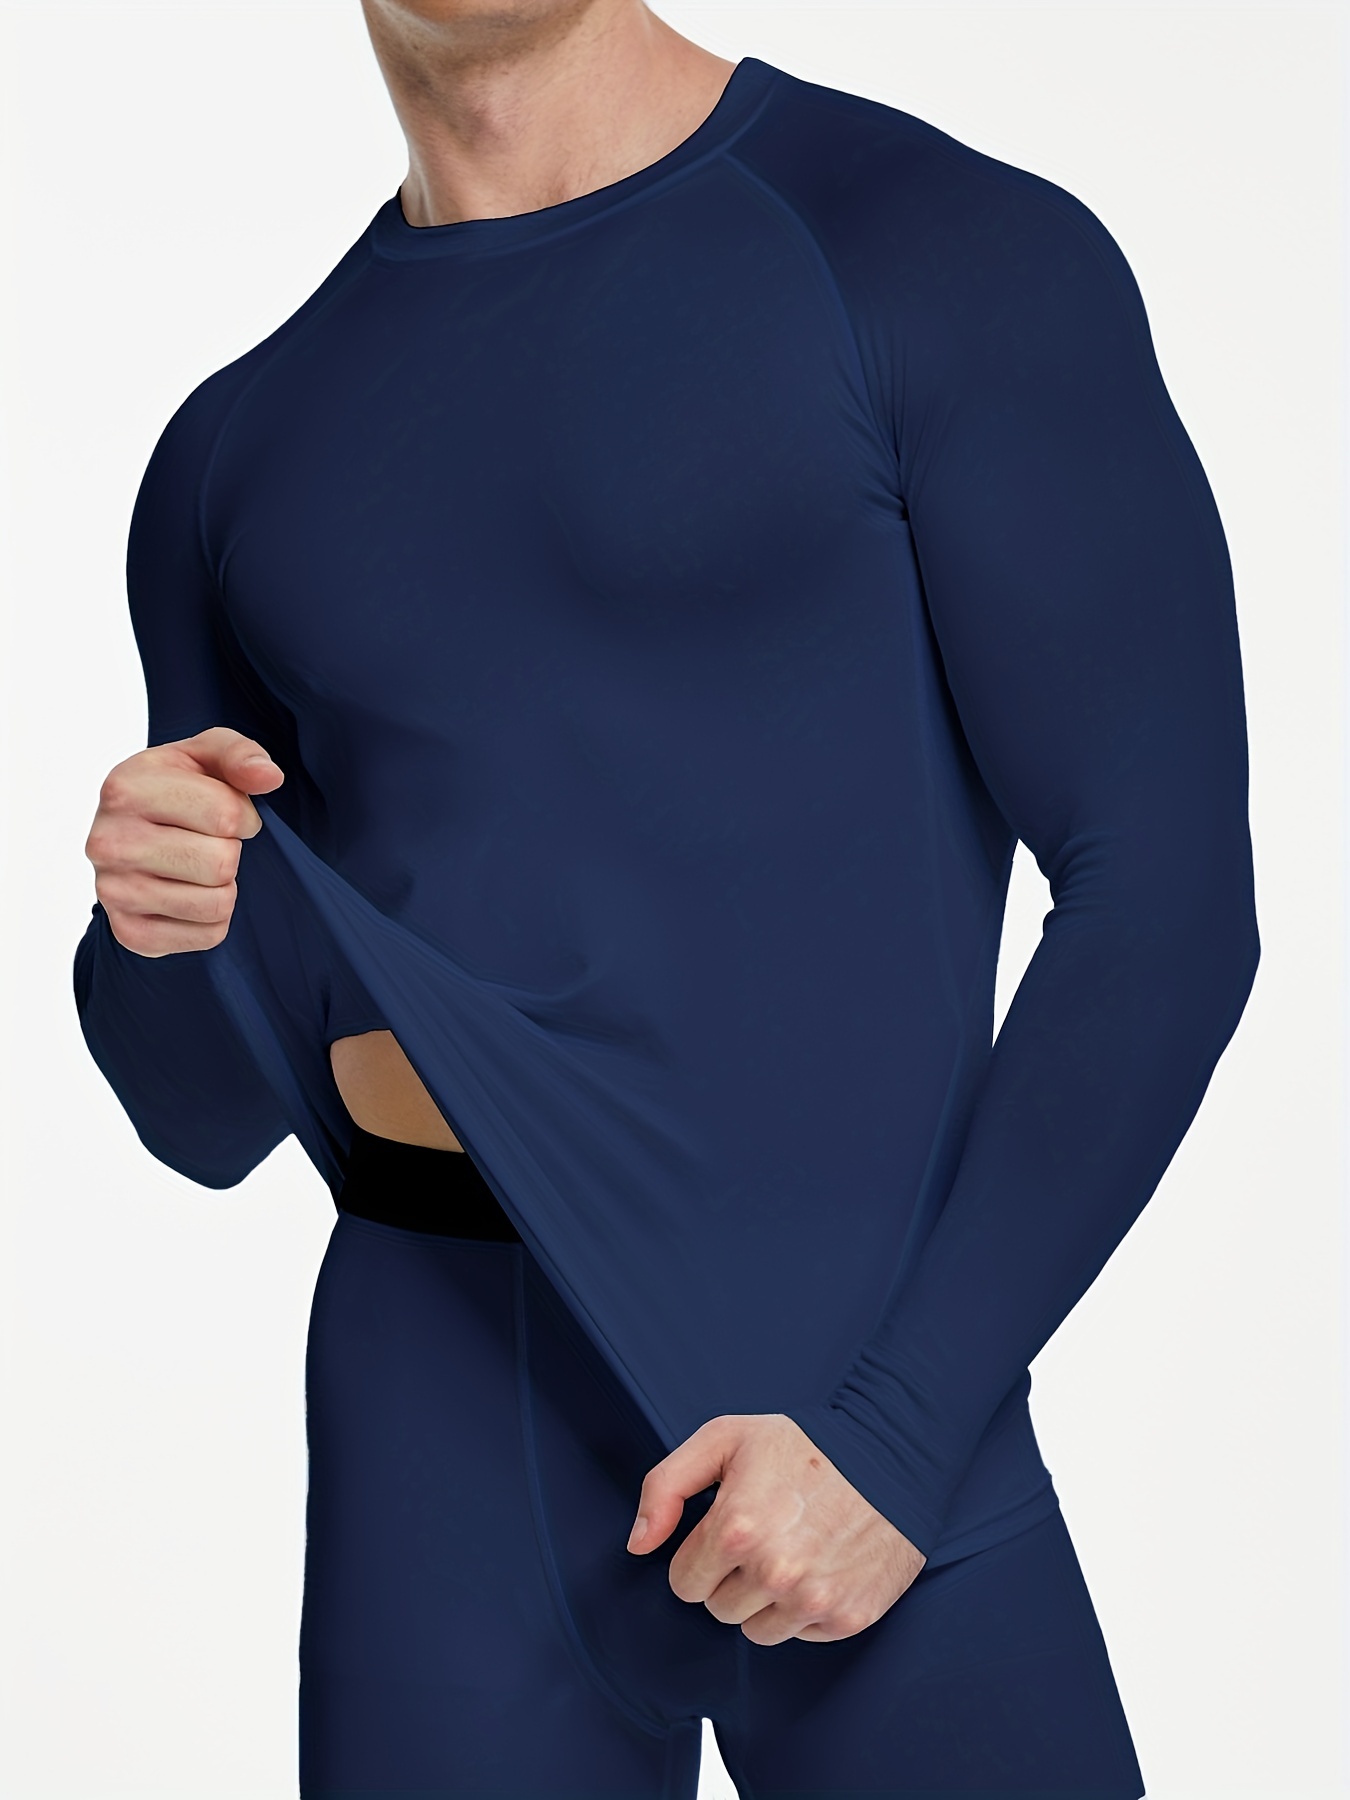 Superhero Compression Shirt Men Quick Dry Long Sleeve Sweatshirt  Bodybuilding Sport Running TShirt Gym Workout Fitness Shirts Size: M,  Color: Clark 2